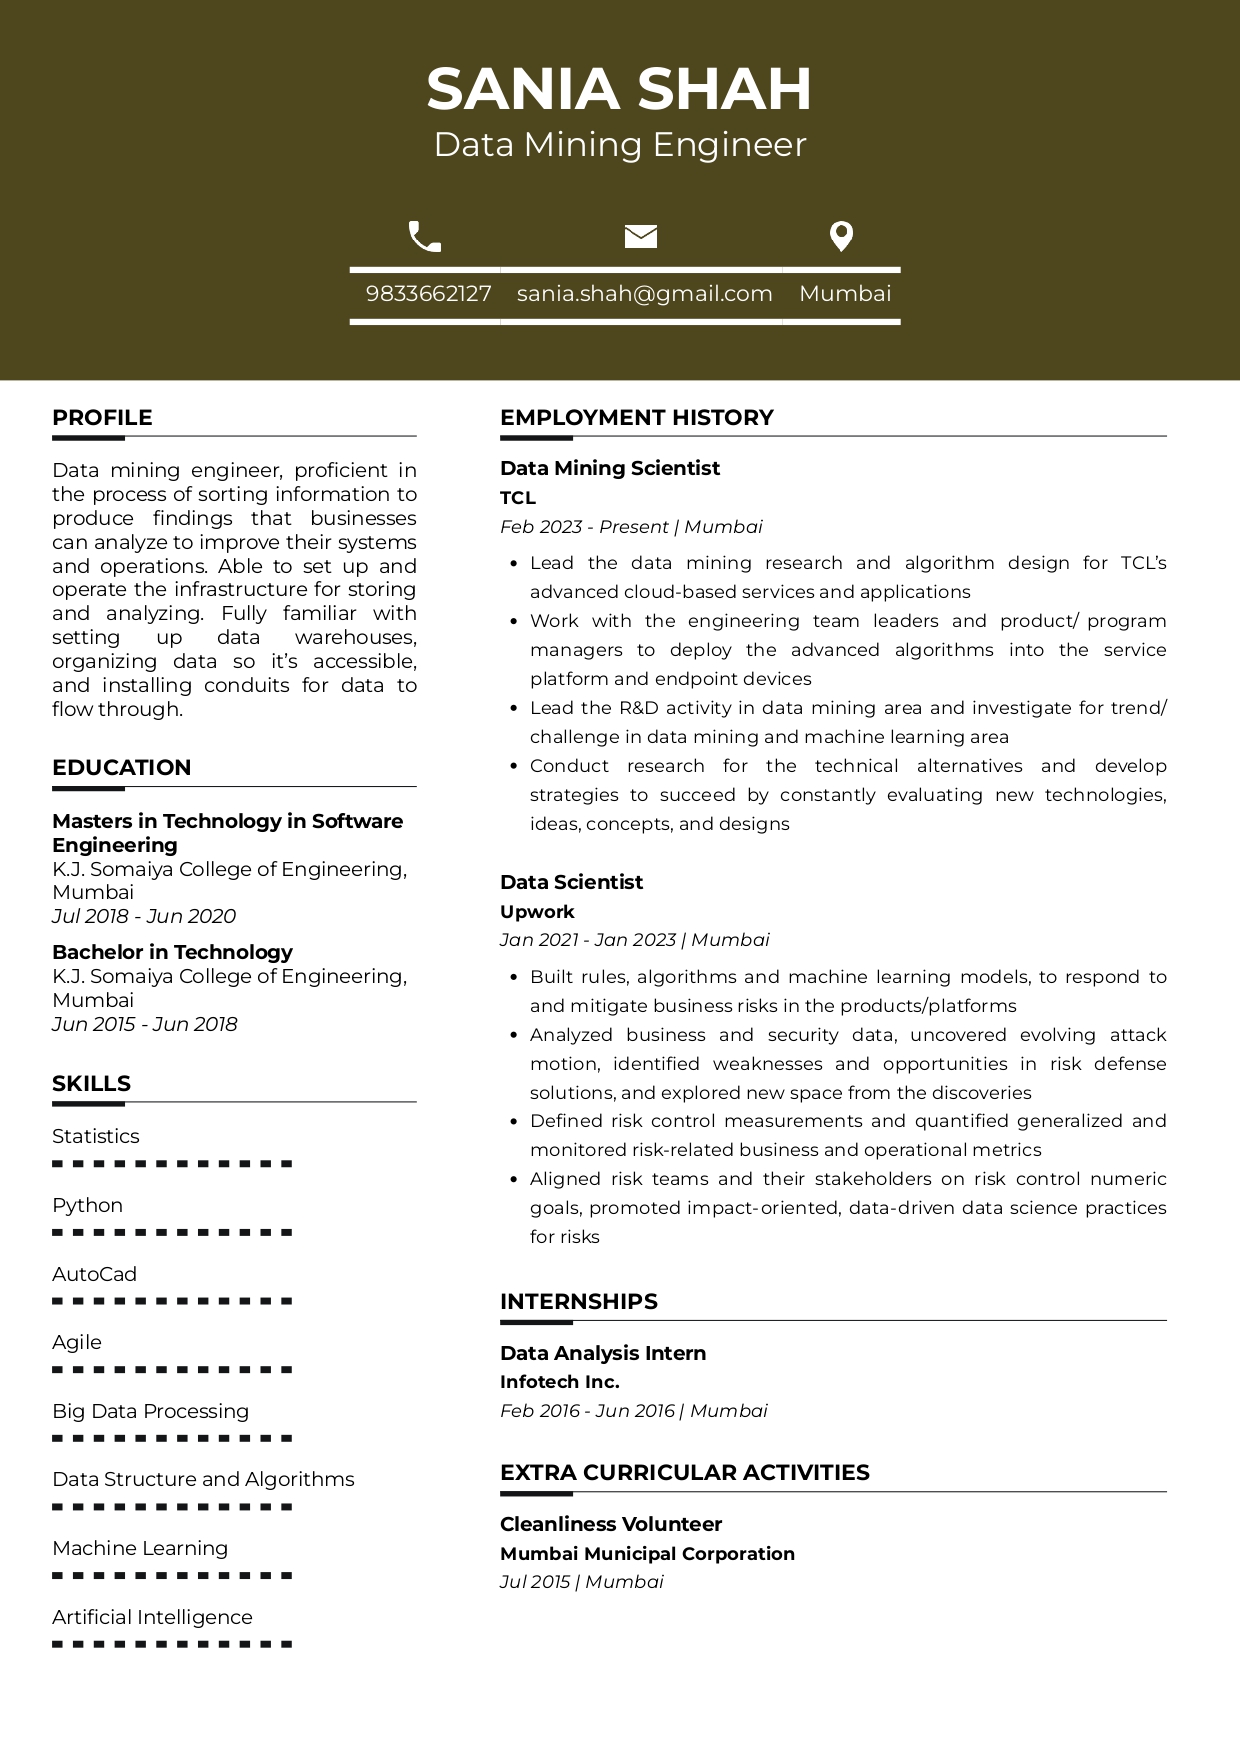 Resume of Data Mining Engineer